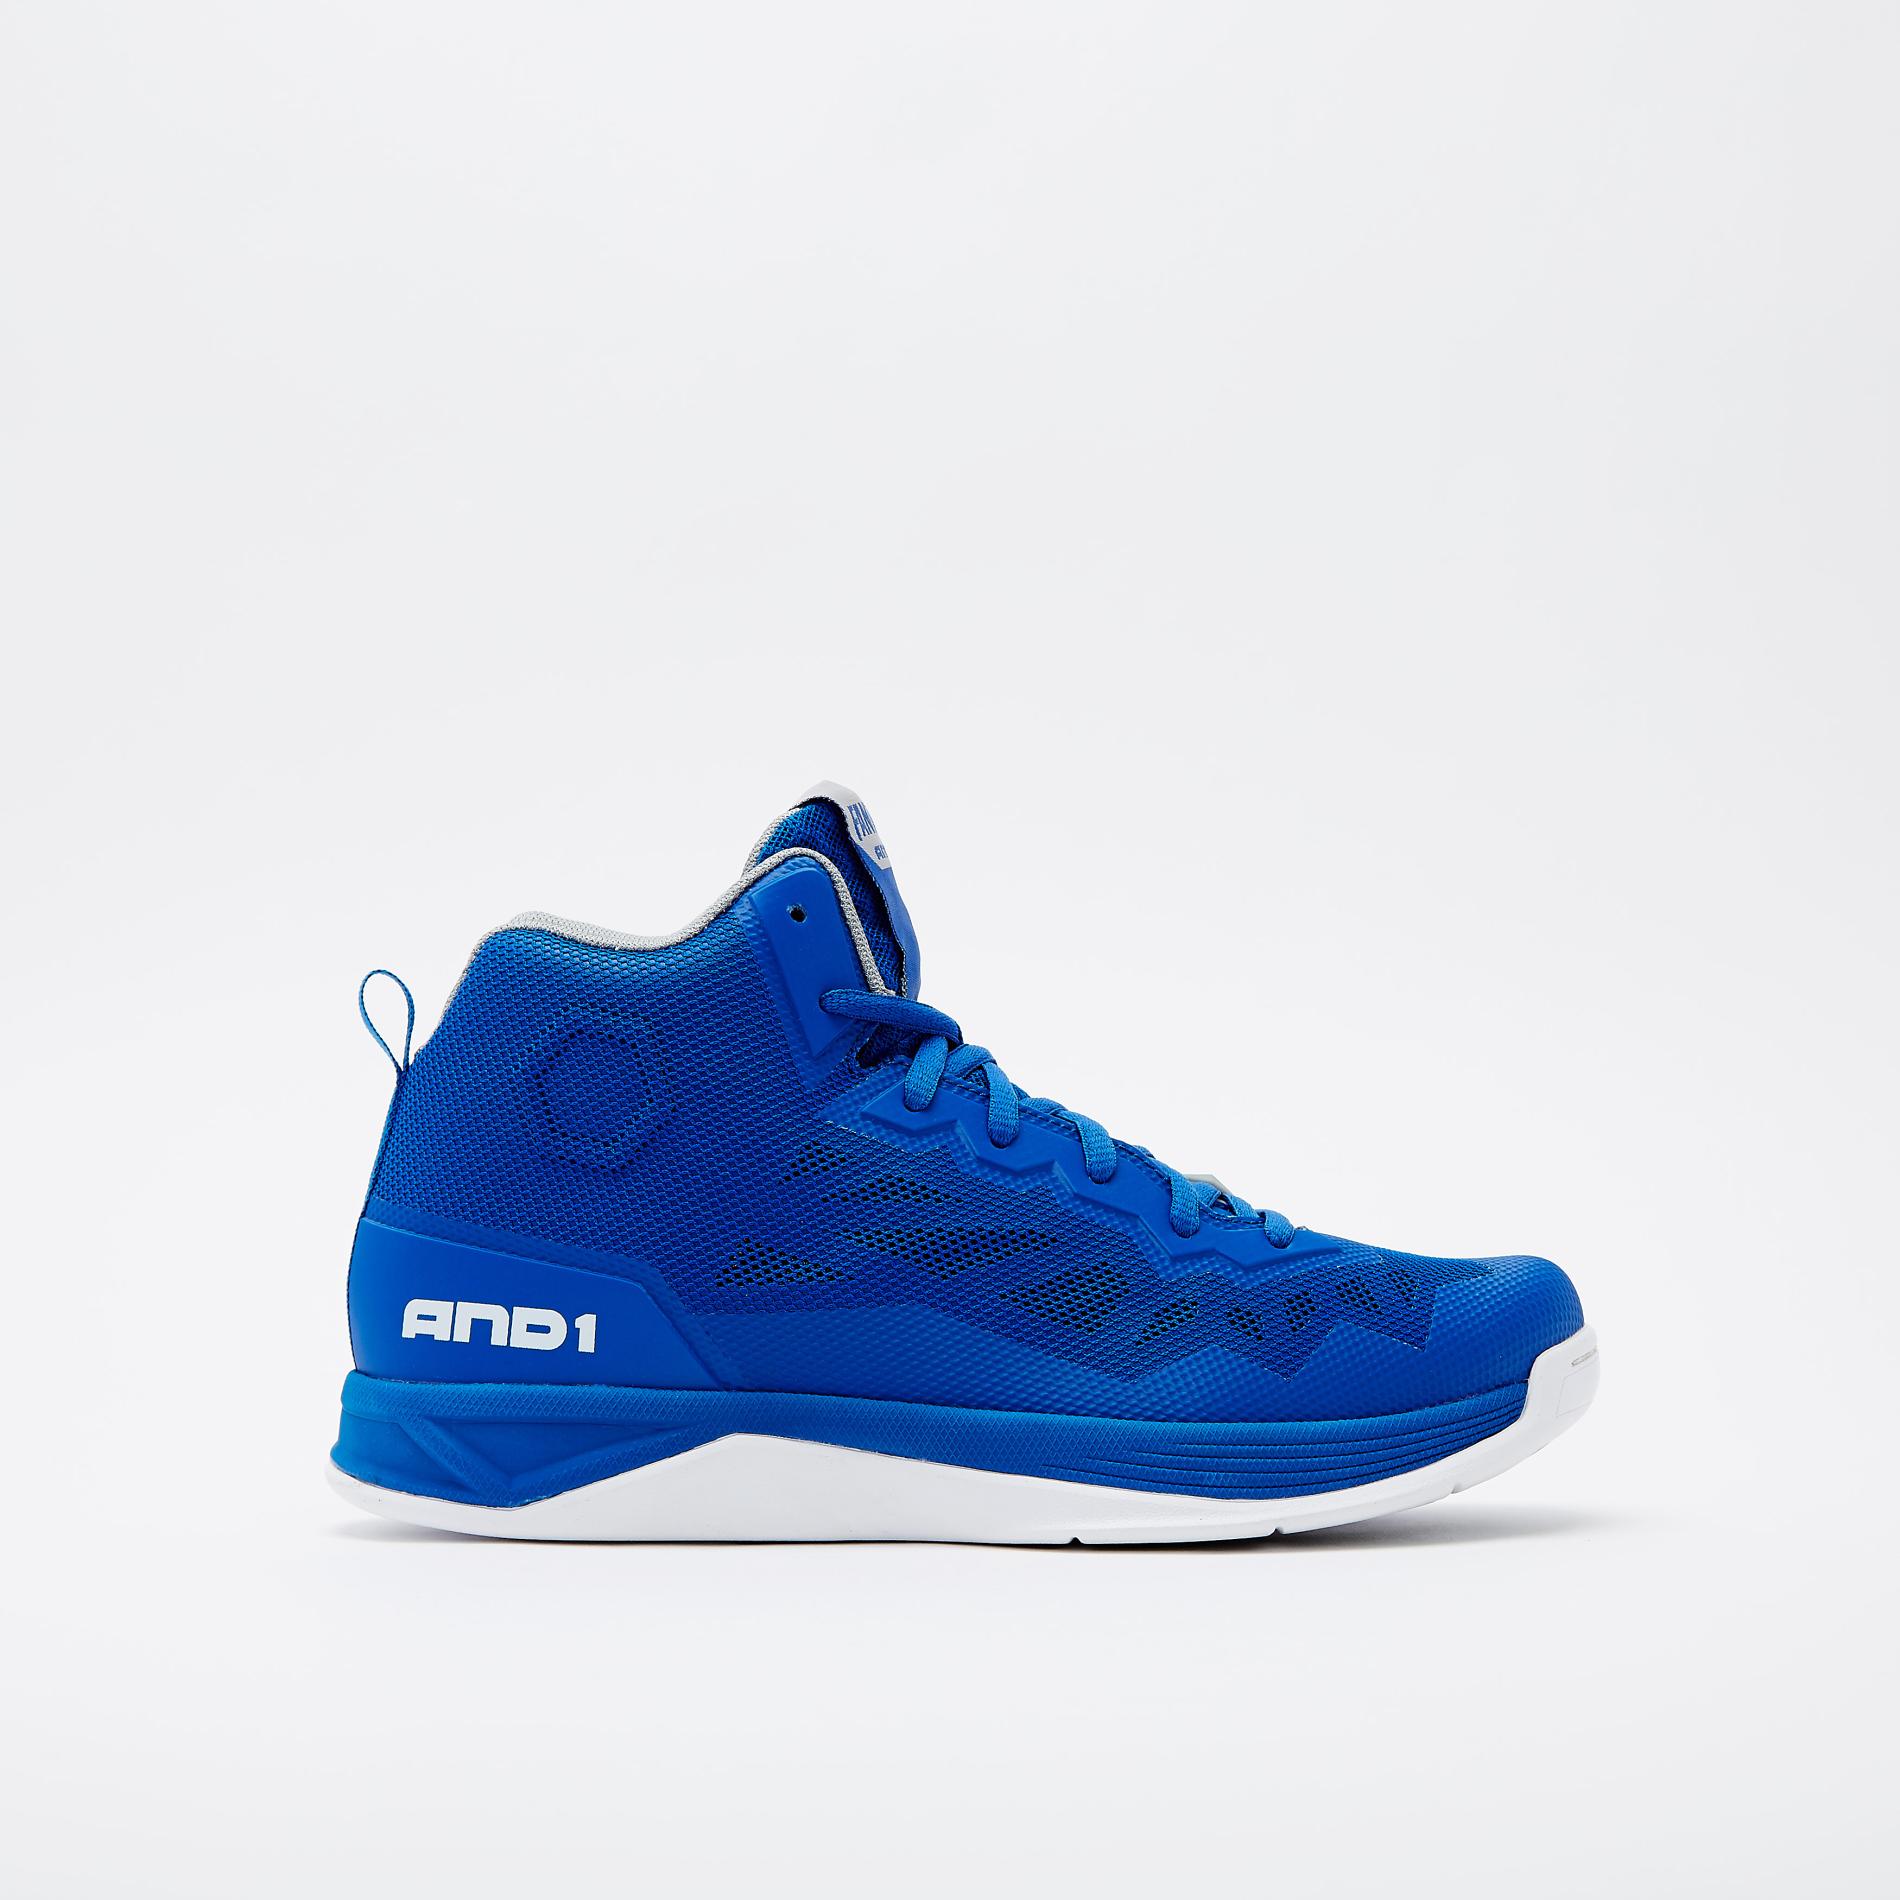 AND 1 Men's Fantom II Blue/White High-Top Basketball Shoe